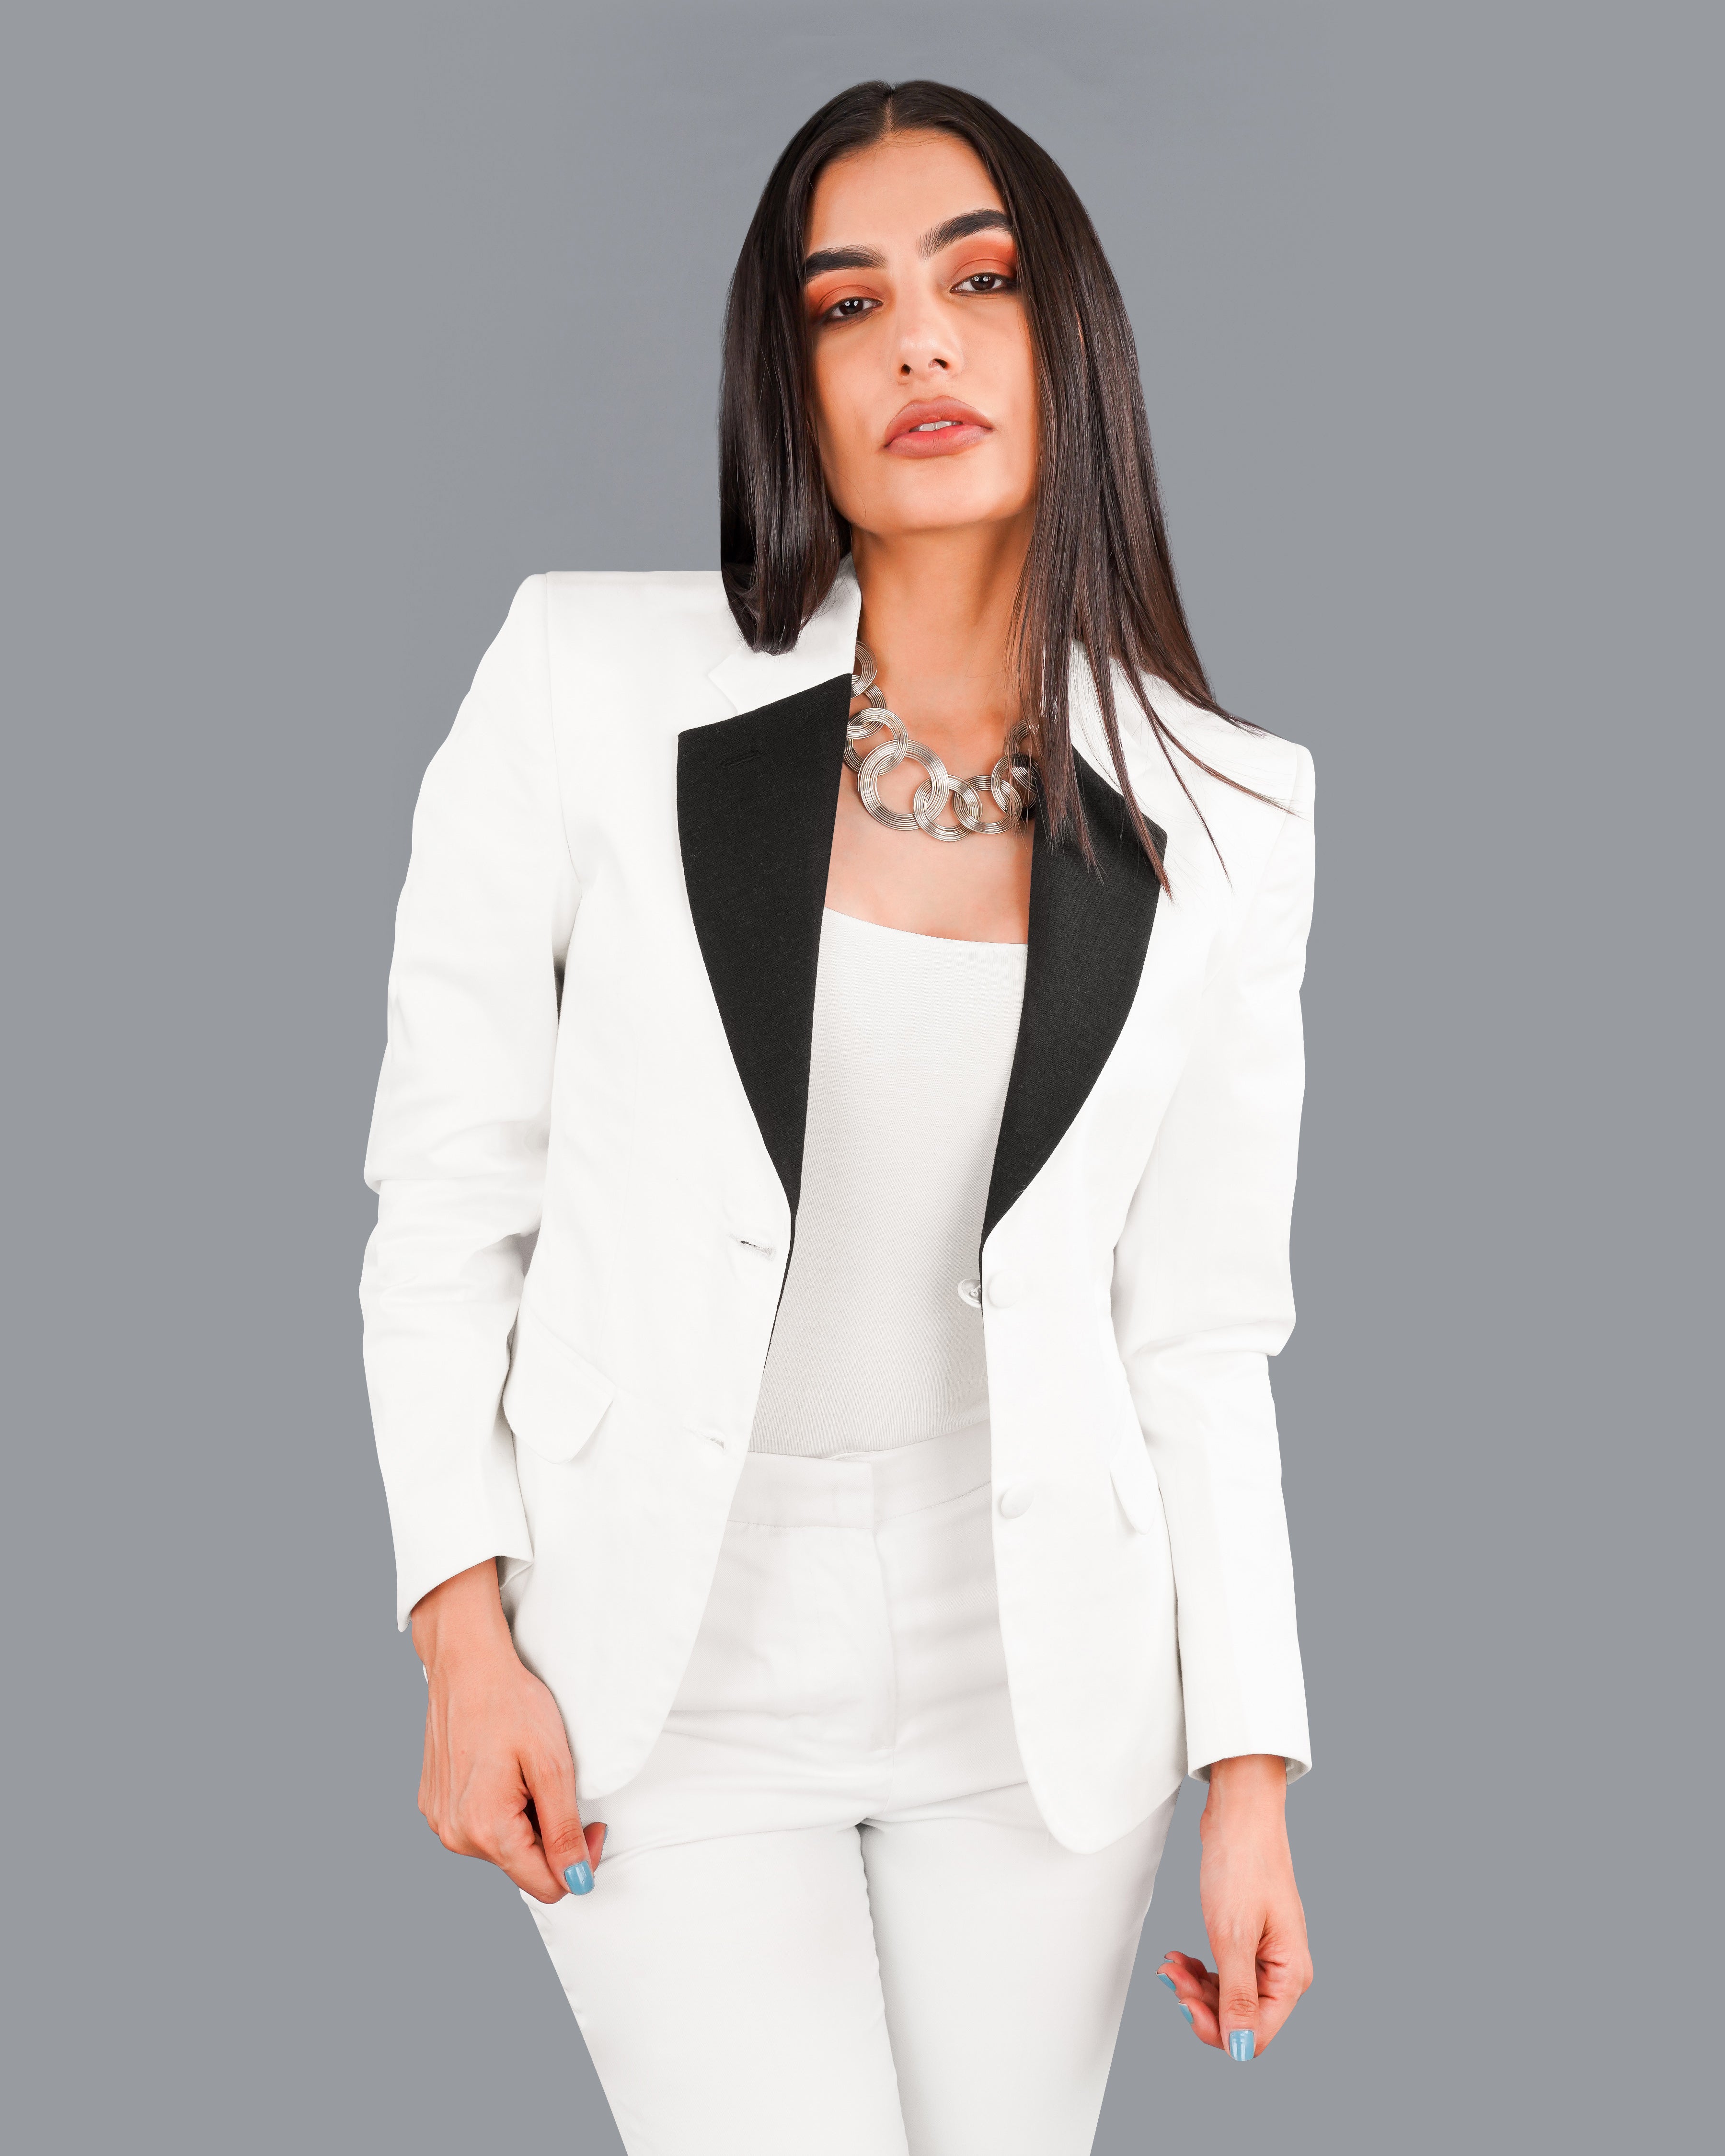 Bright White with Black Patch Collar Premium Cotton Women's Suit WST005-SB-BKPL-FB-32, WST005-SB-BKPL-FB-34, WST005-SB-BKPL-FB-36, WST005-SB-BKPL-FB-38, WST005-SB-BKPL-FB-40, WST005-SB-BKPL-FB-42